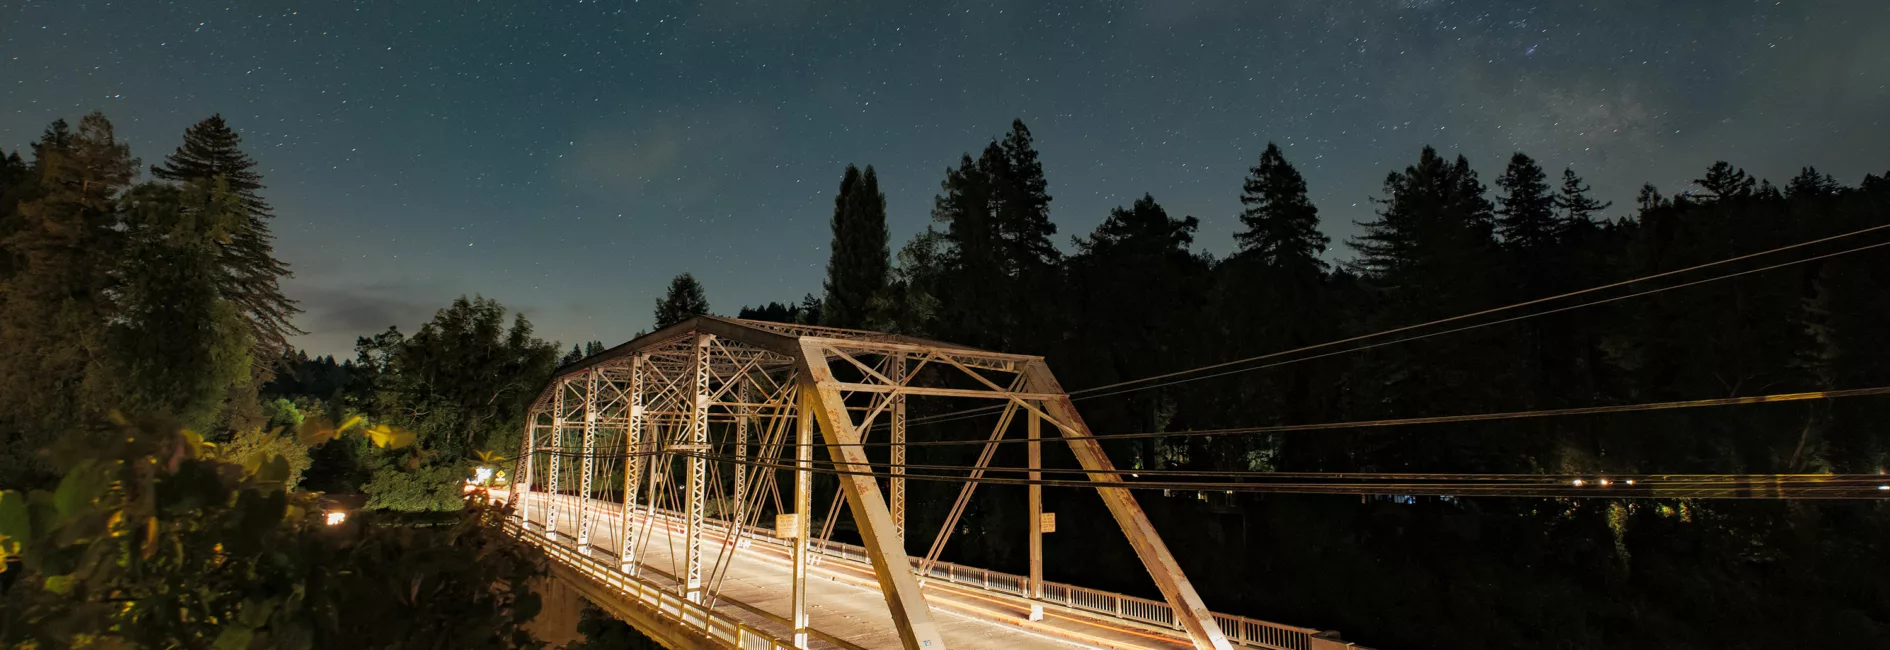 Guerneville bridge on a starry night